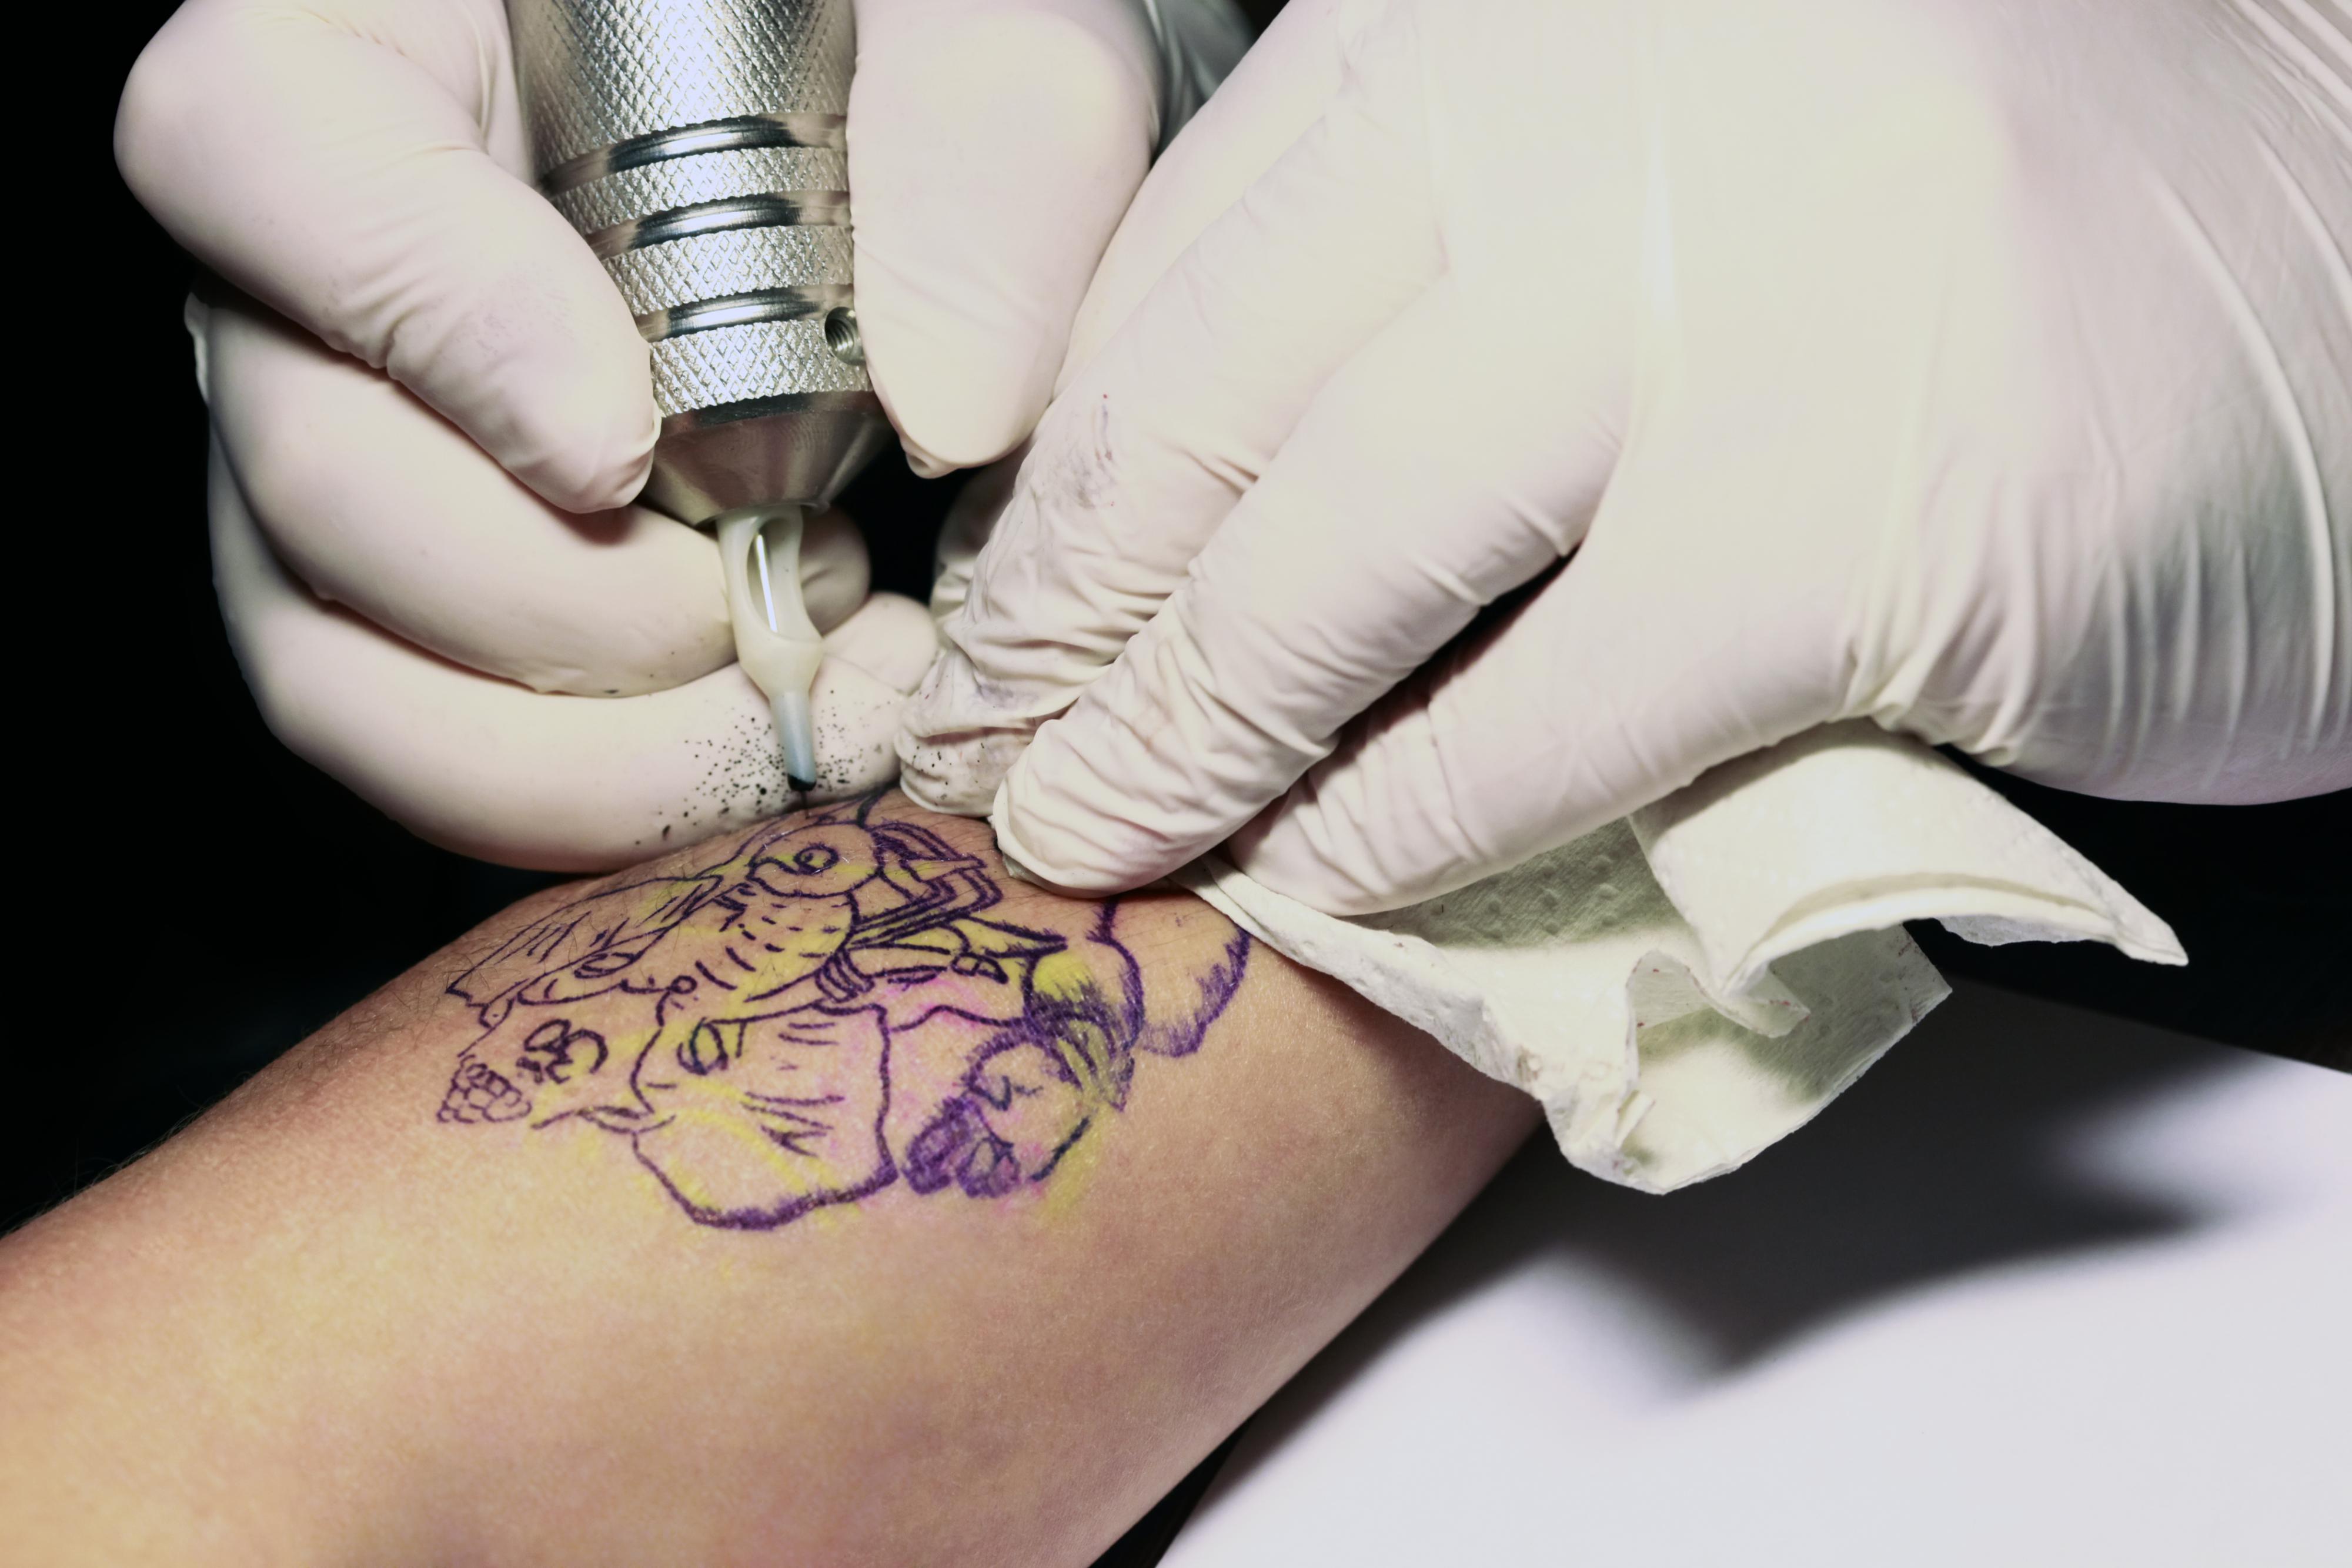 tatoeage-inkt nog steeds kankerverwekkend